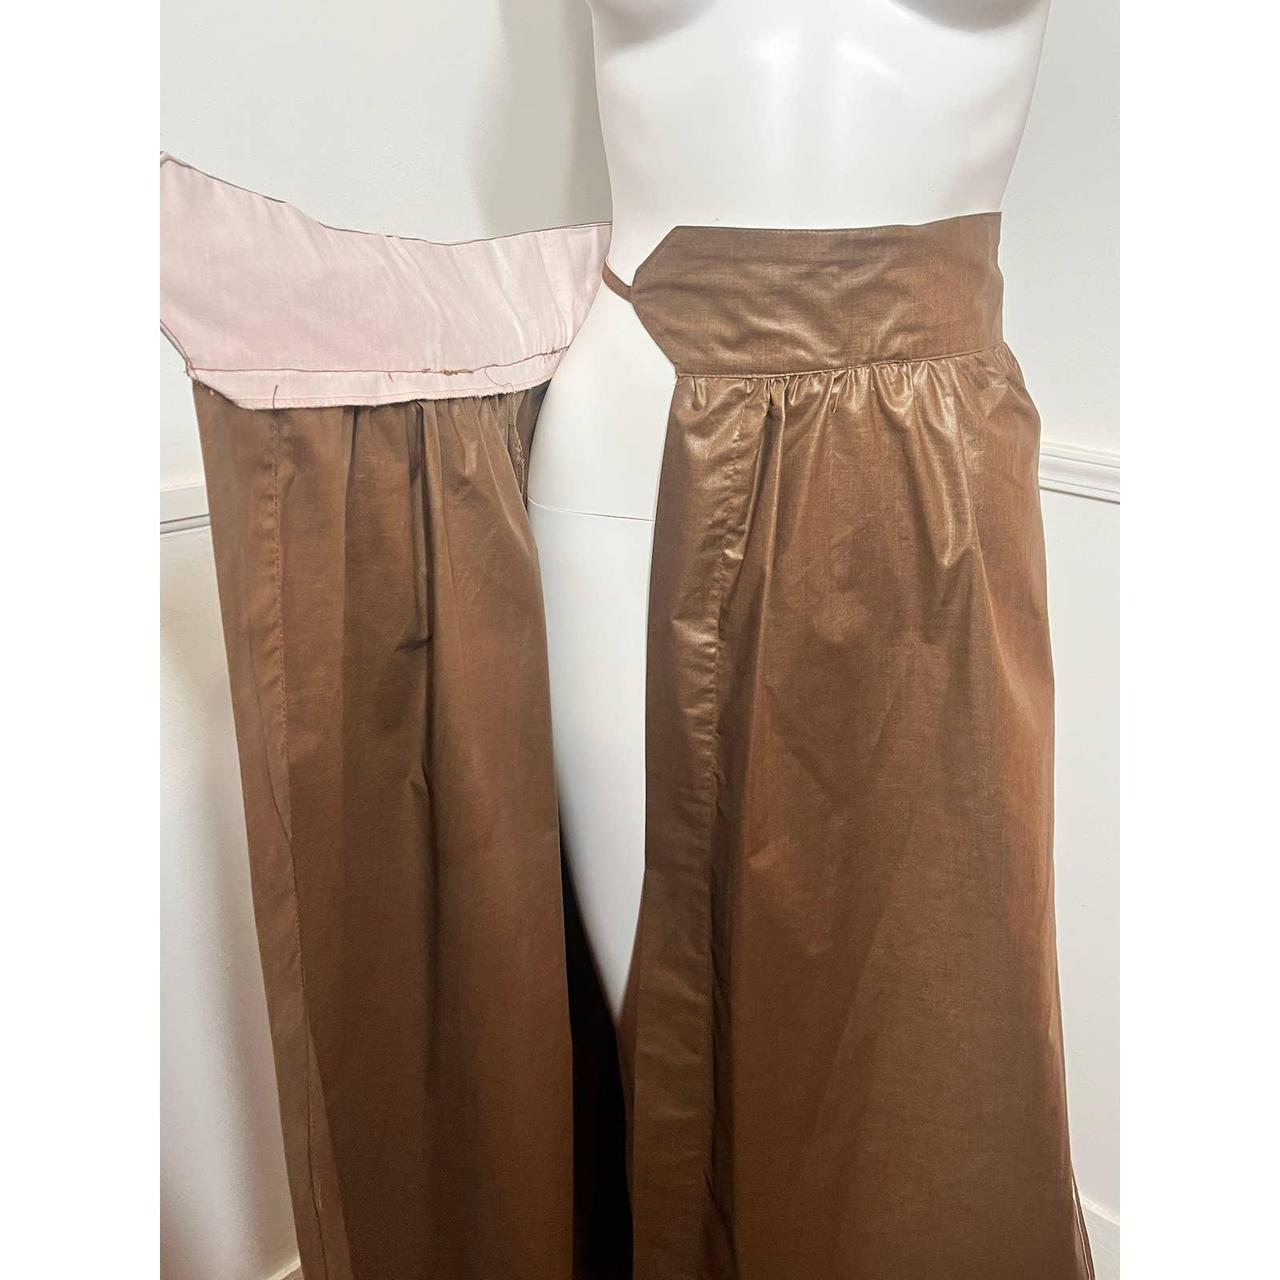 Geoffrey Beene Women's Brown and Pink Skirt (5)